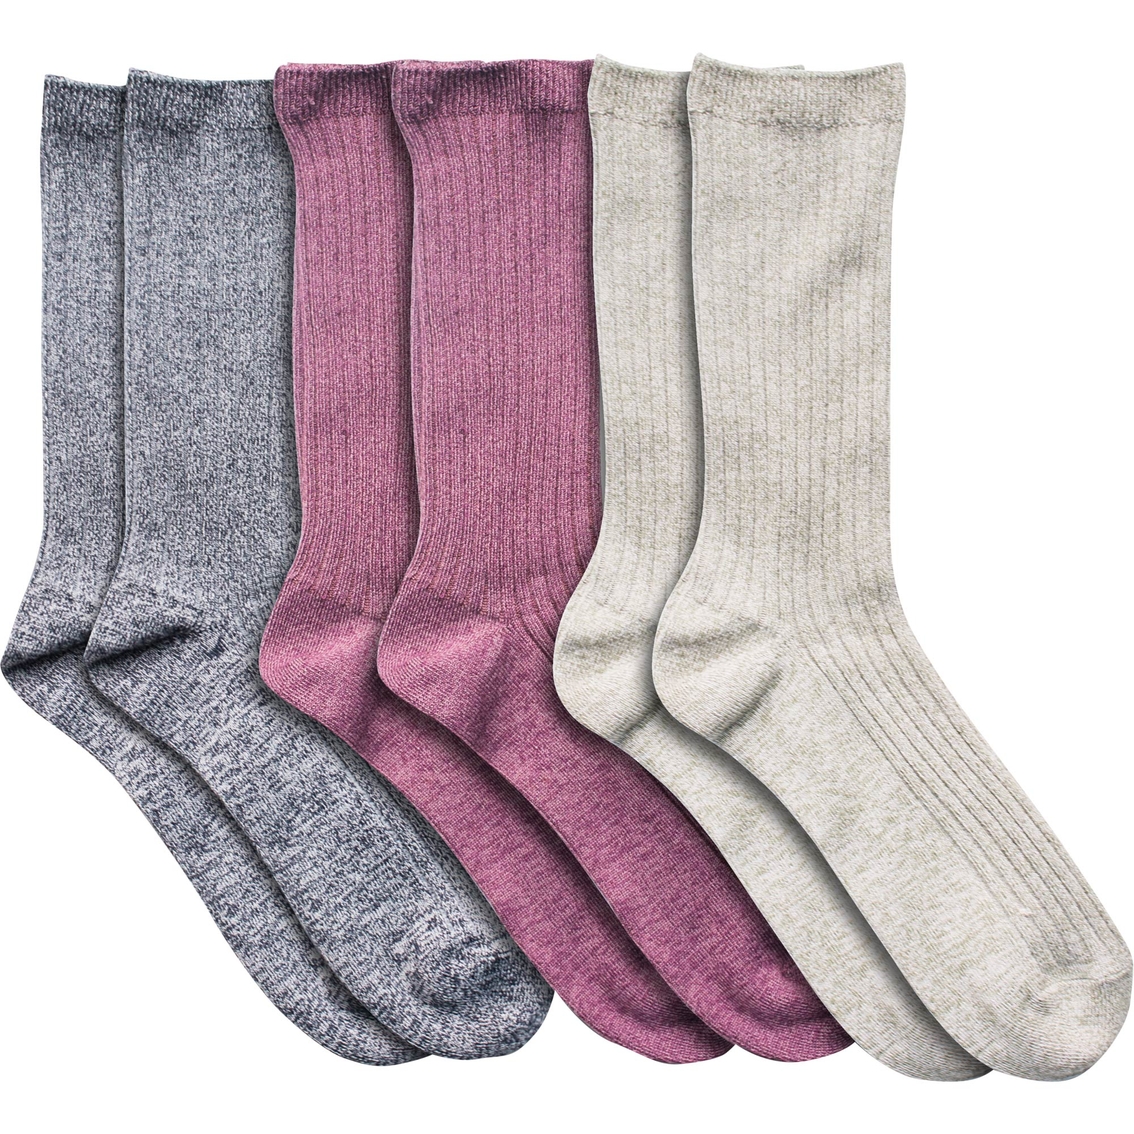 Keds Super Soft Crew Socks 3 Pk. | Hosiery & Socks | Handbags ...